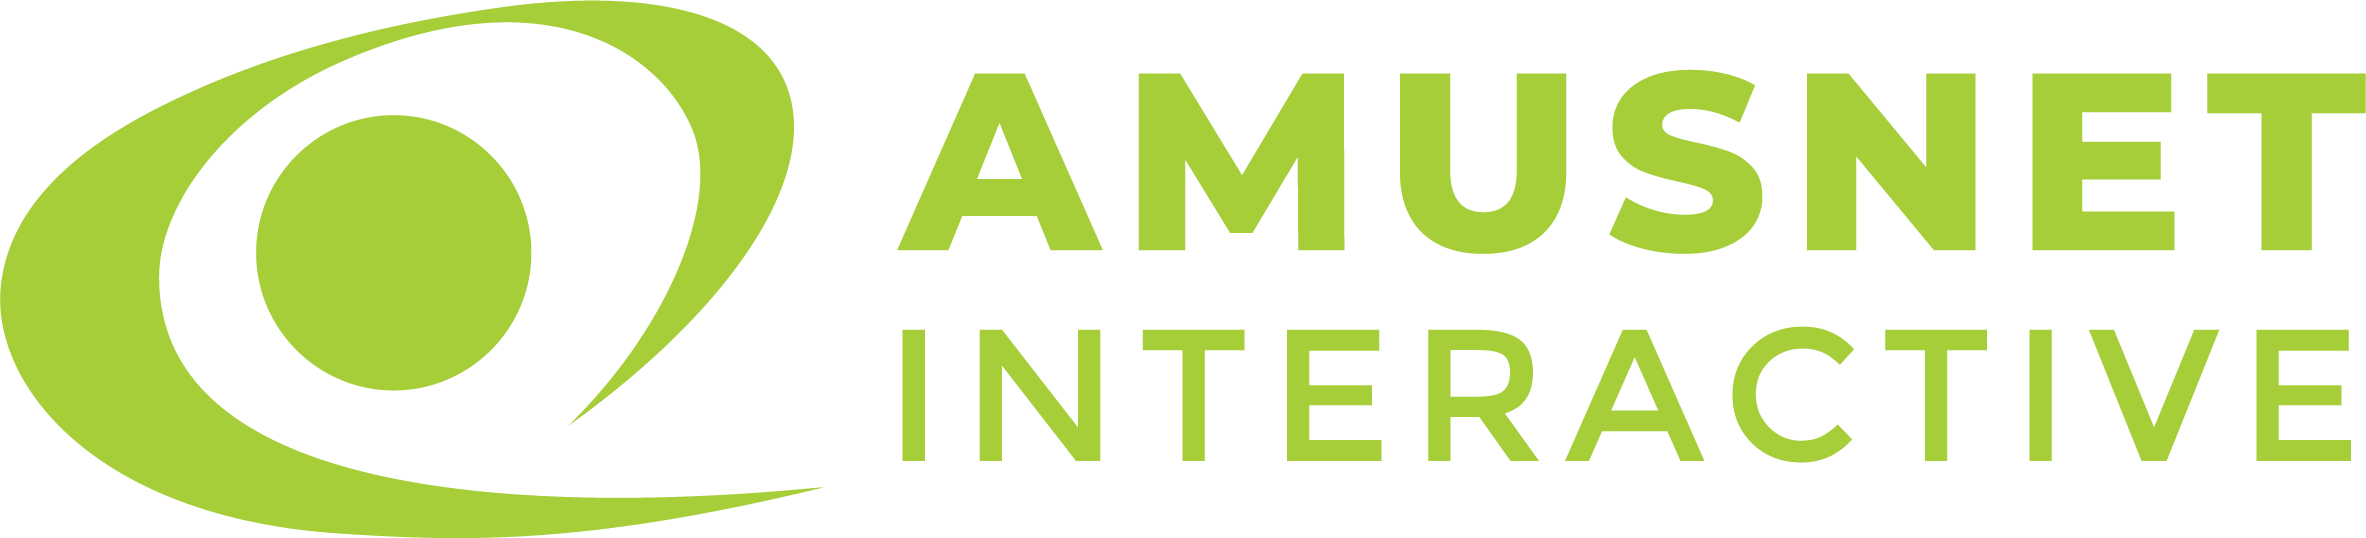 AMUSNET Interacticy (раее EGT Interactive) игры